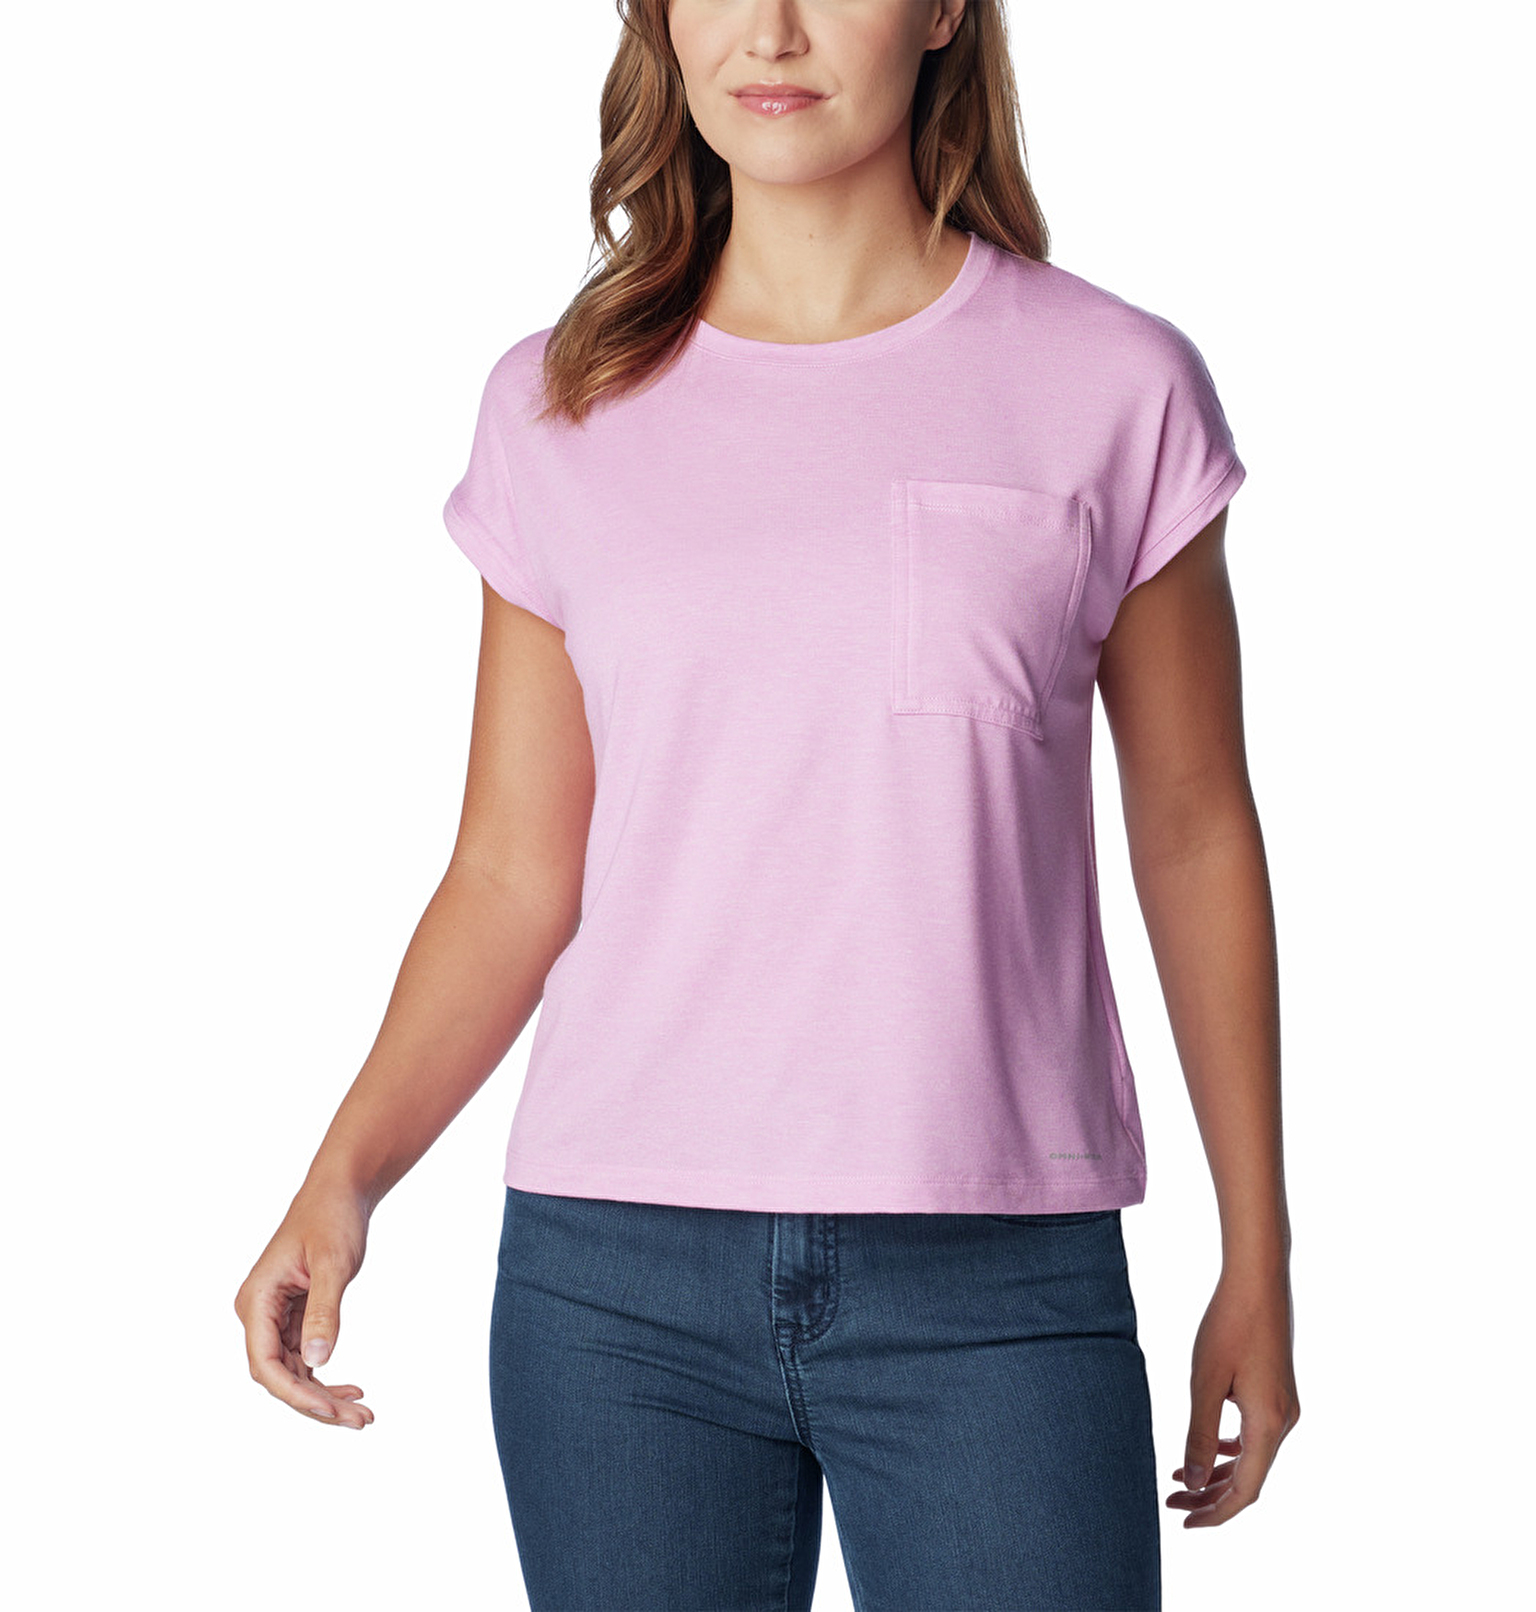 Boundless Trek Kadın Kısa Kollu T-Shirt